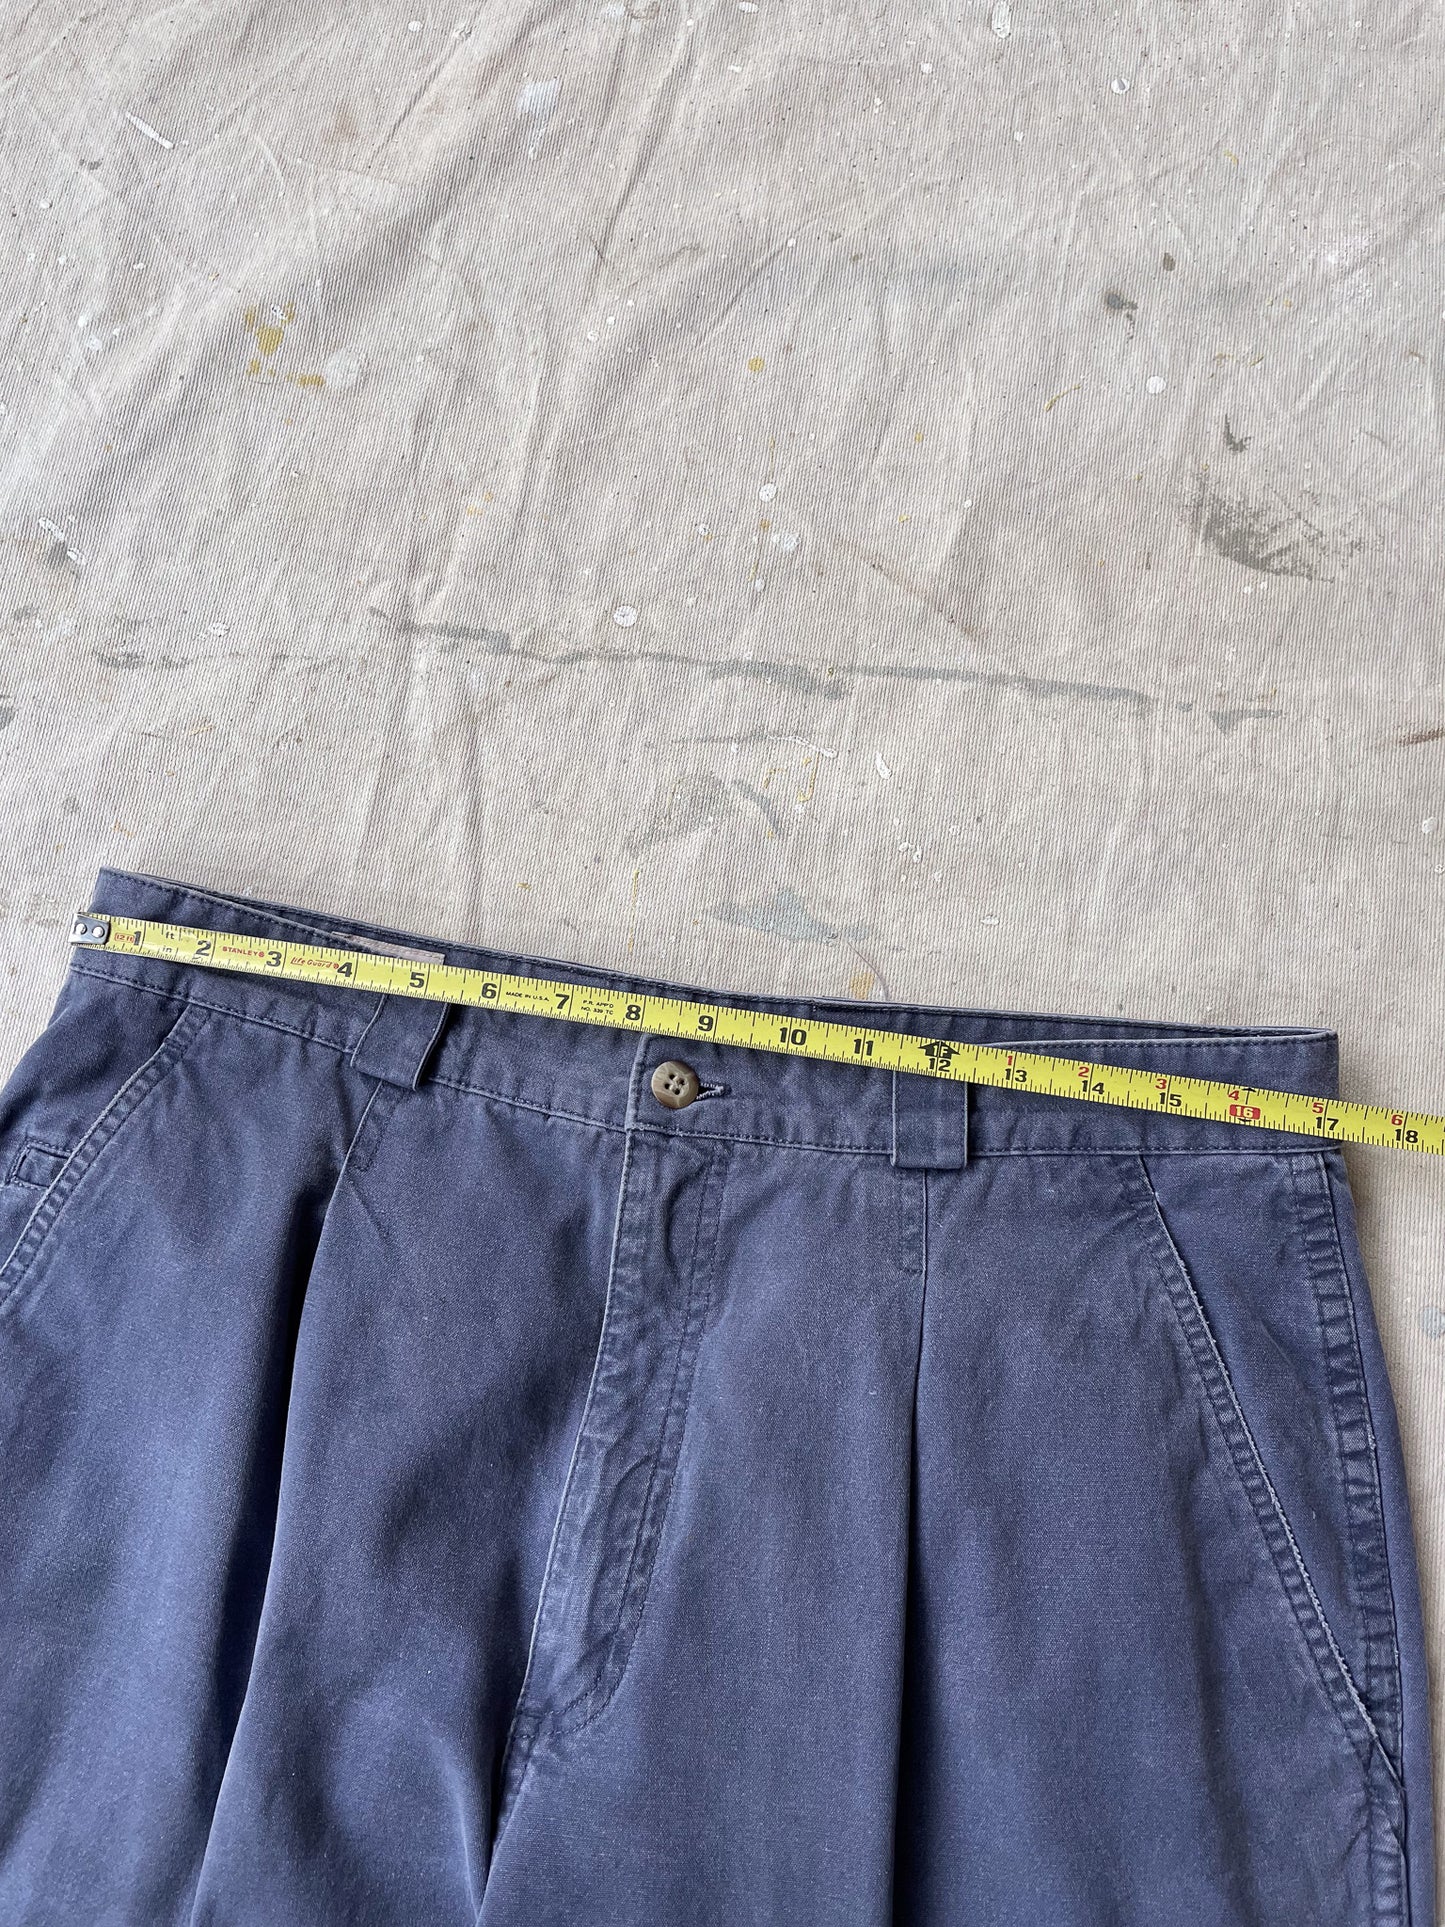 Banana Republic Pleated Pants—[34x33]